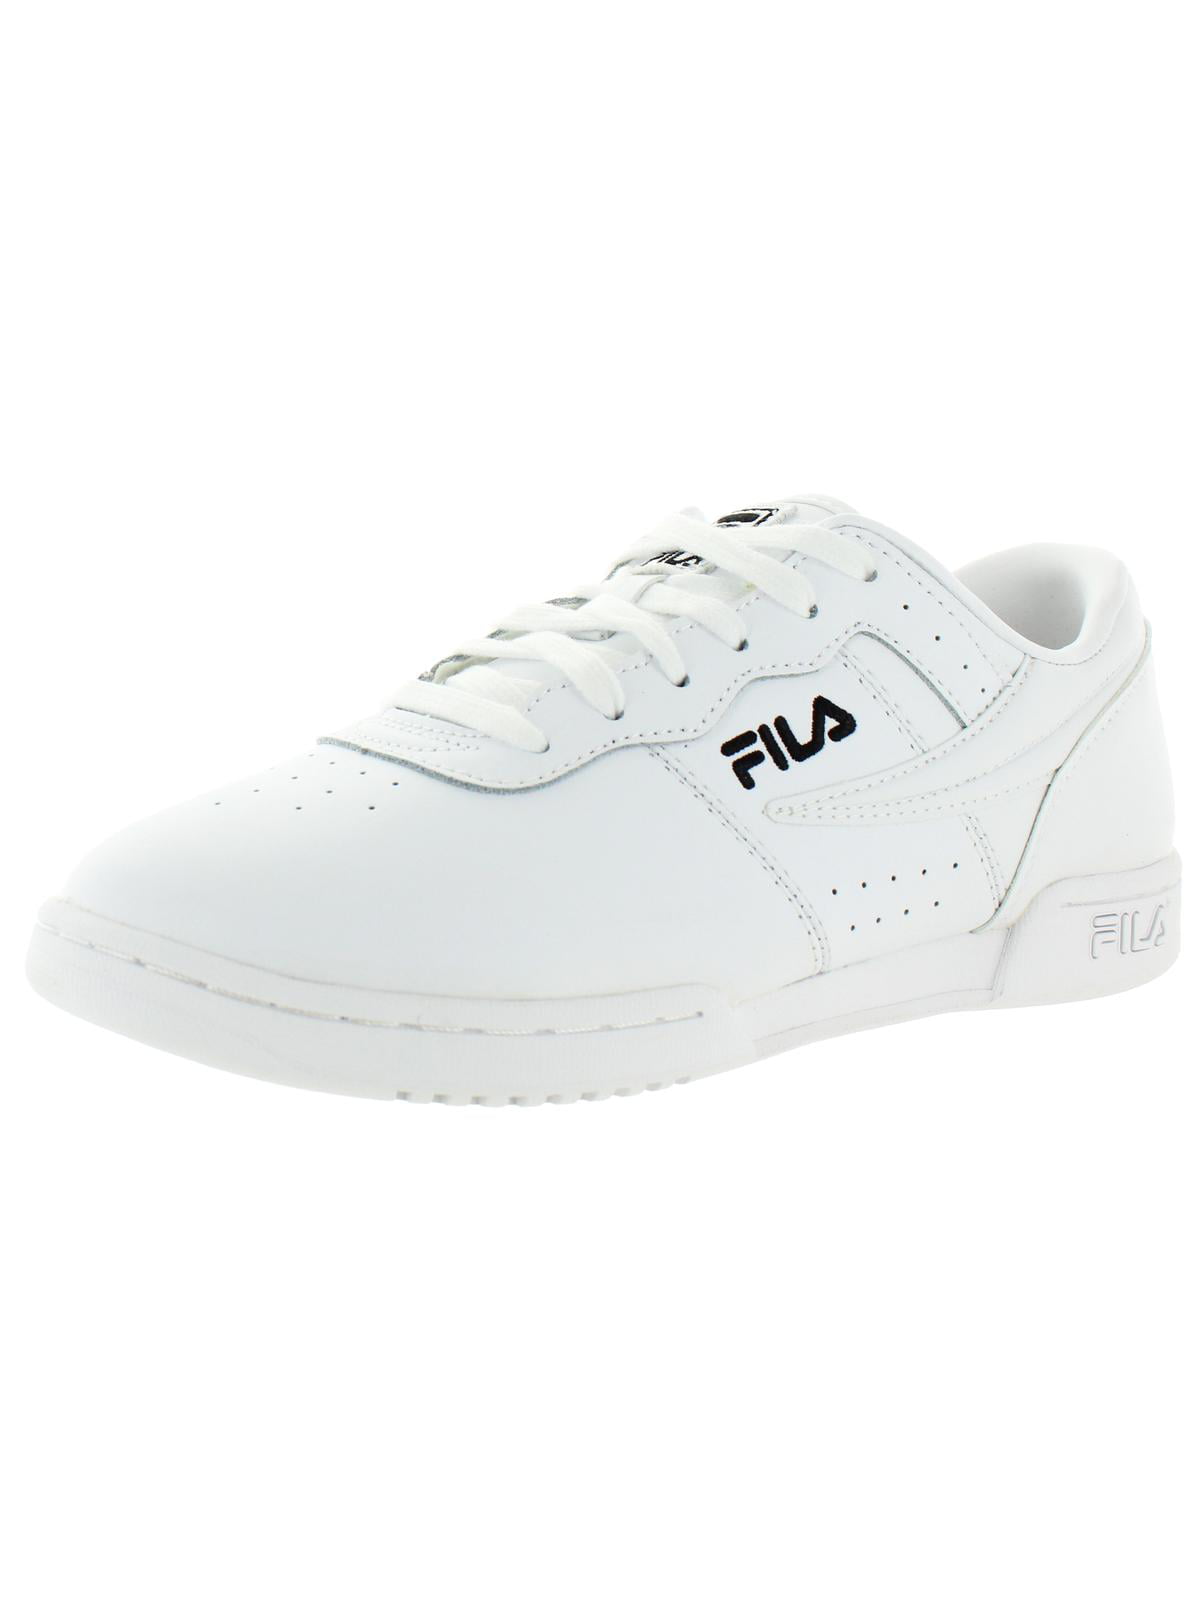 Fila Mens Original Fitness Trainers Leather Sneakers White 6.5 Medium ...